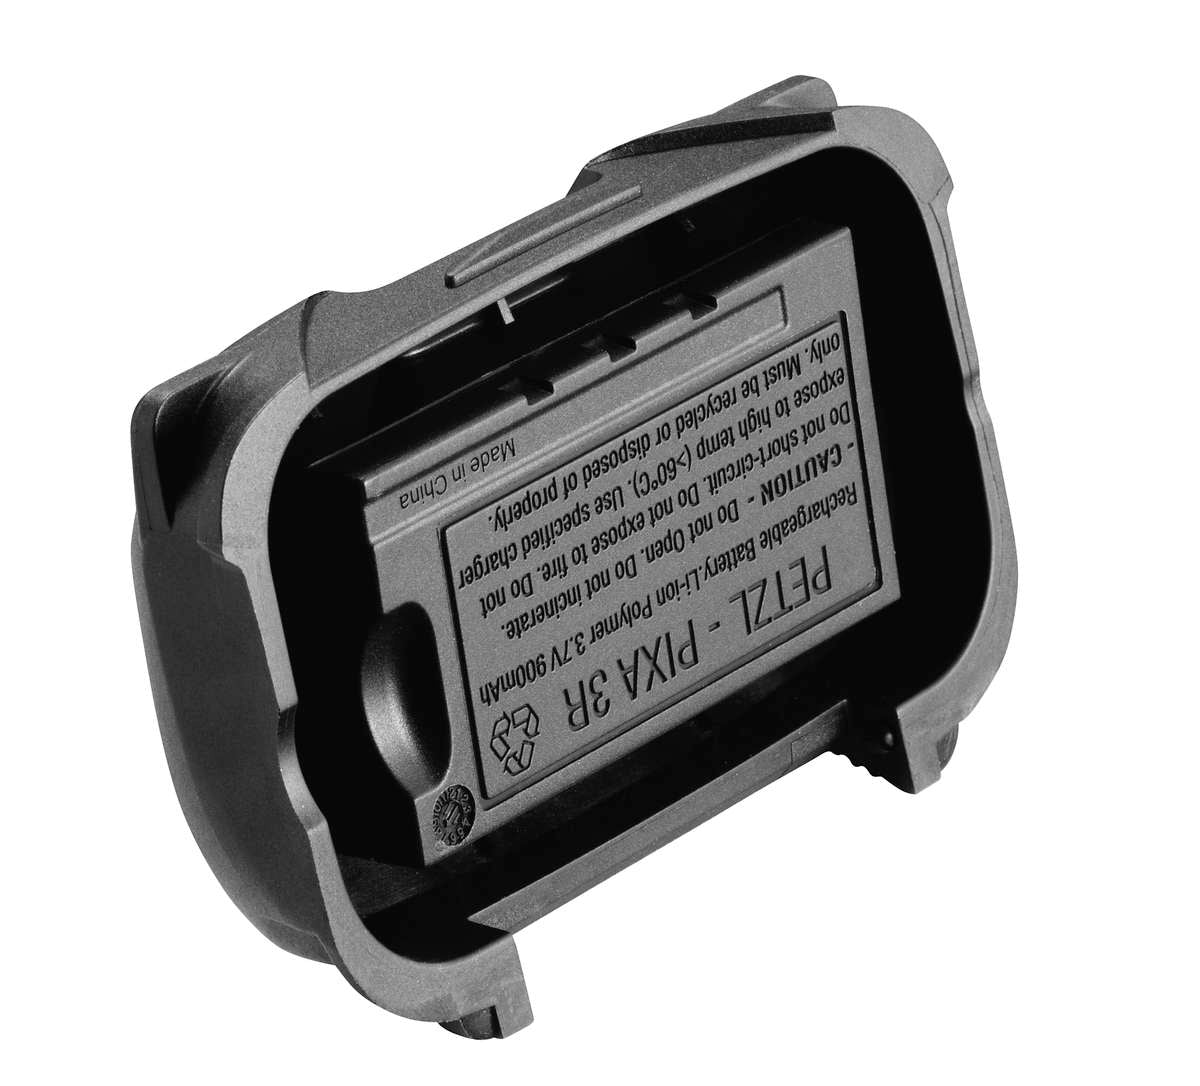 Rechargeable battery for PIXA 3R - E78003